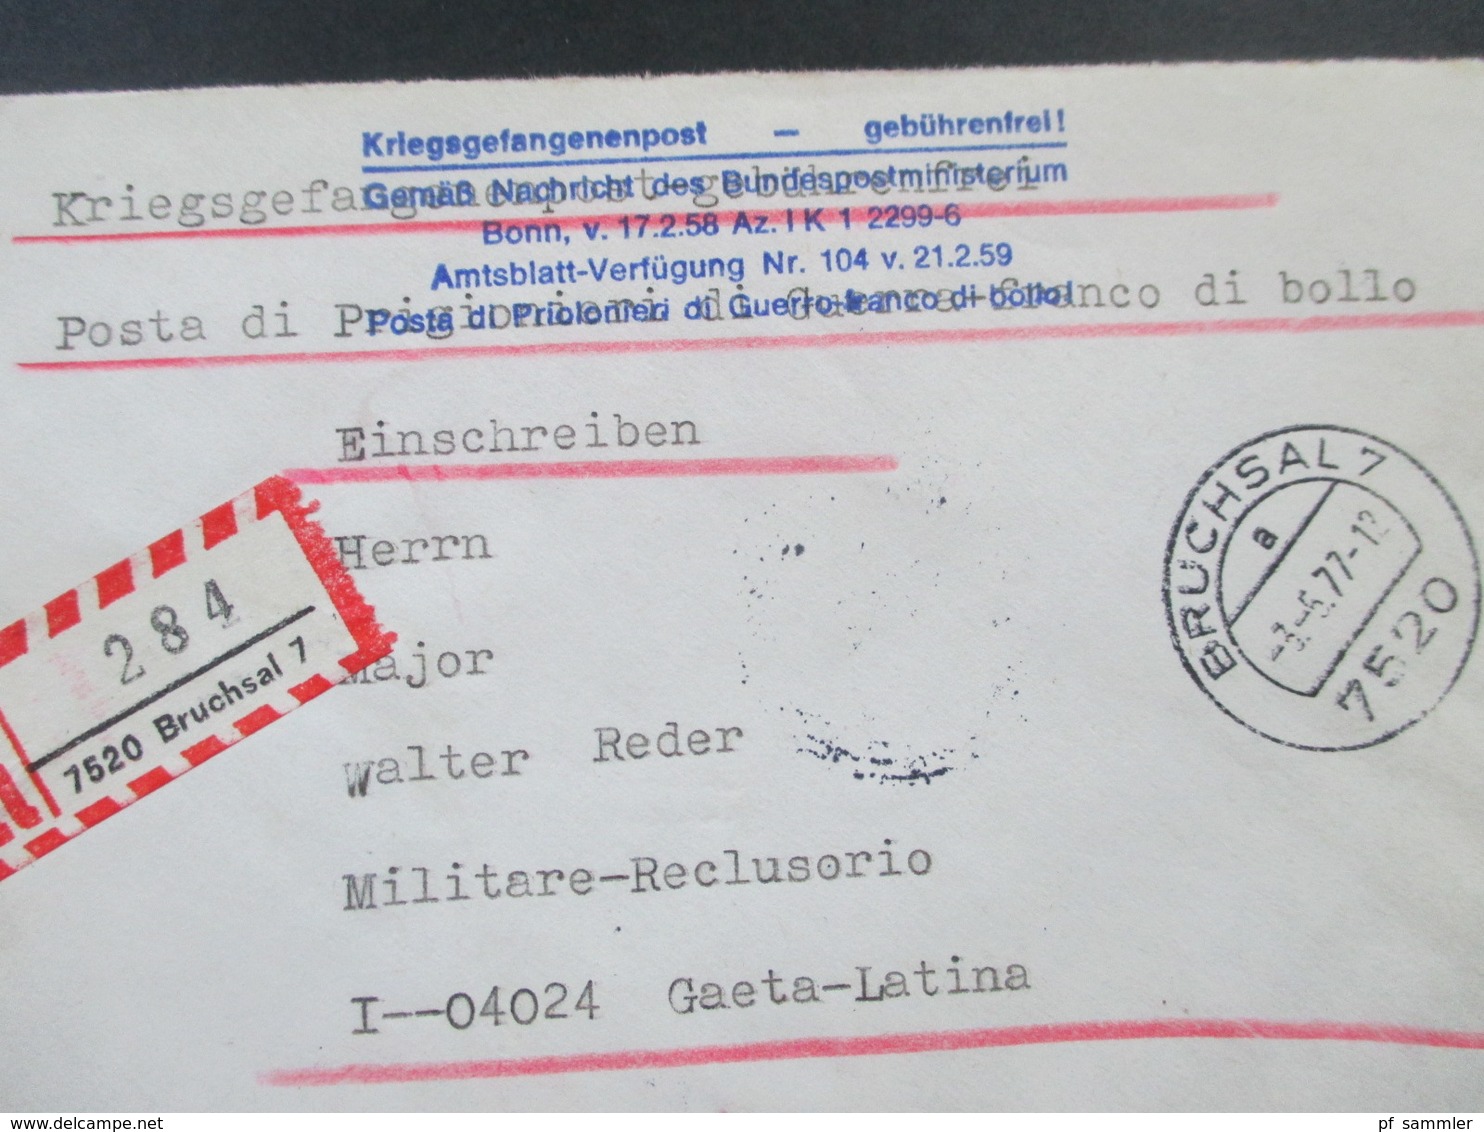 10 Kriegsgefangenbriefe 1977 an den Kriegsverbrecher SS Sturmbandführer Walter Reder Militare Reclusorio Gaeta Italien